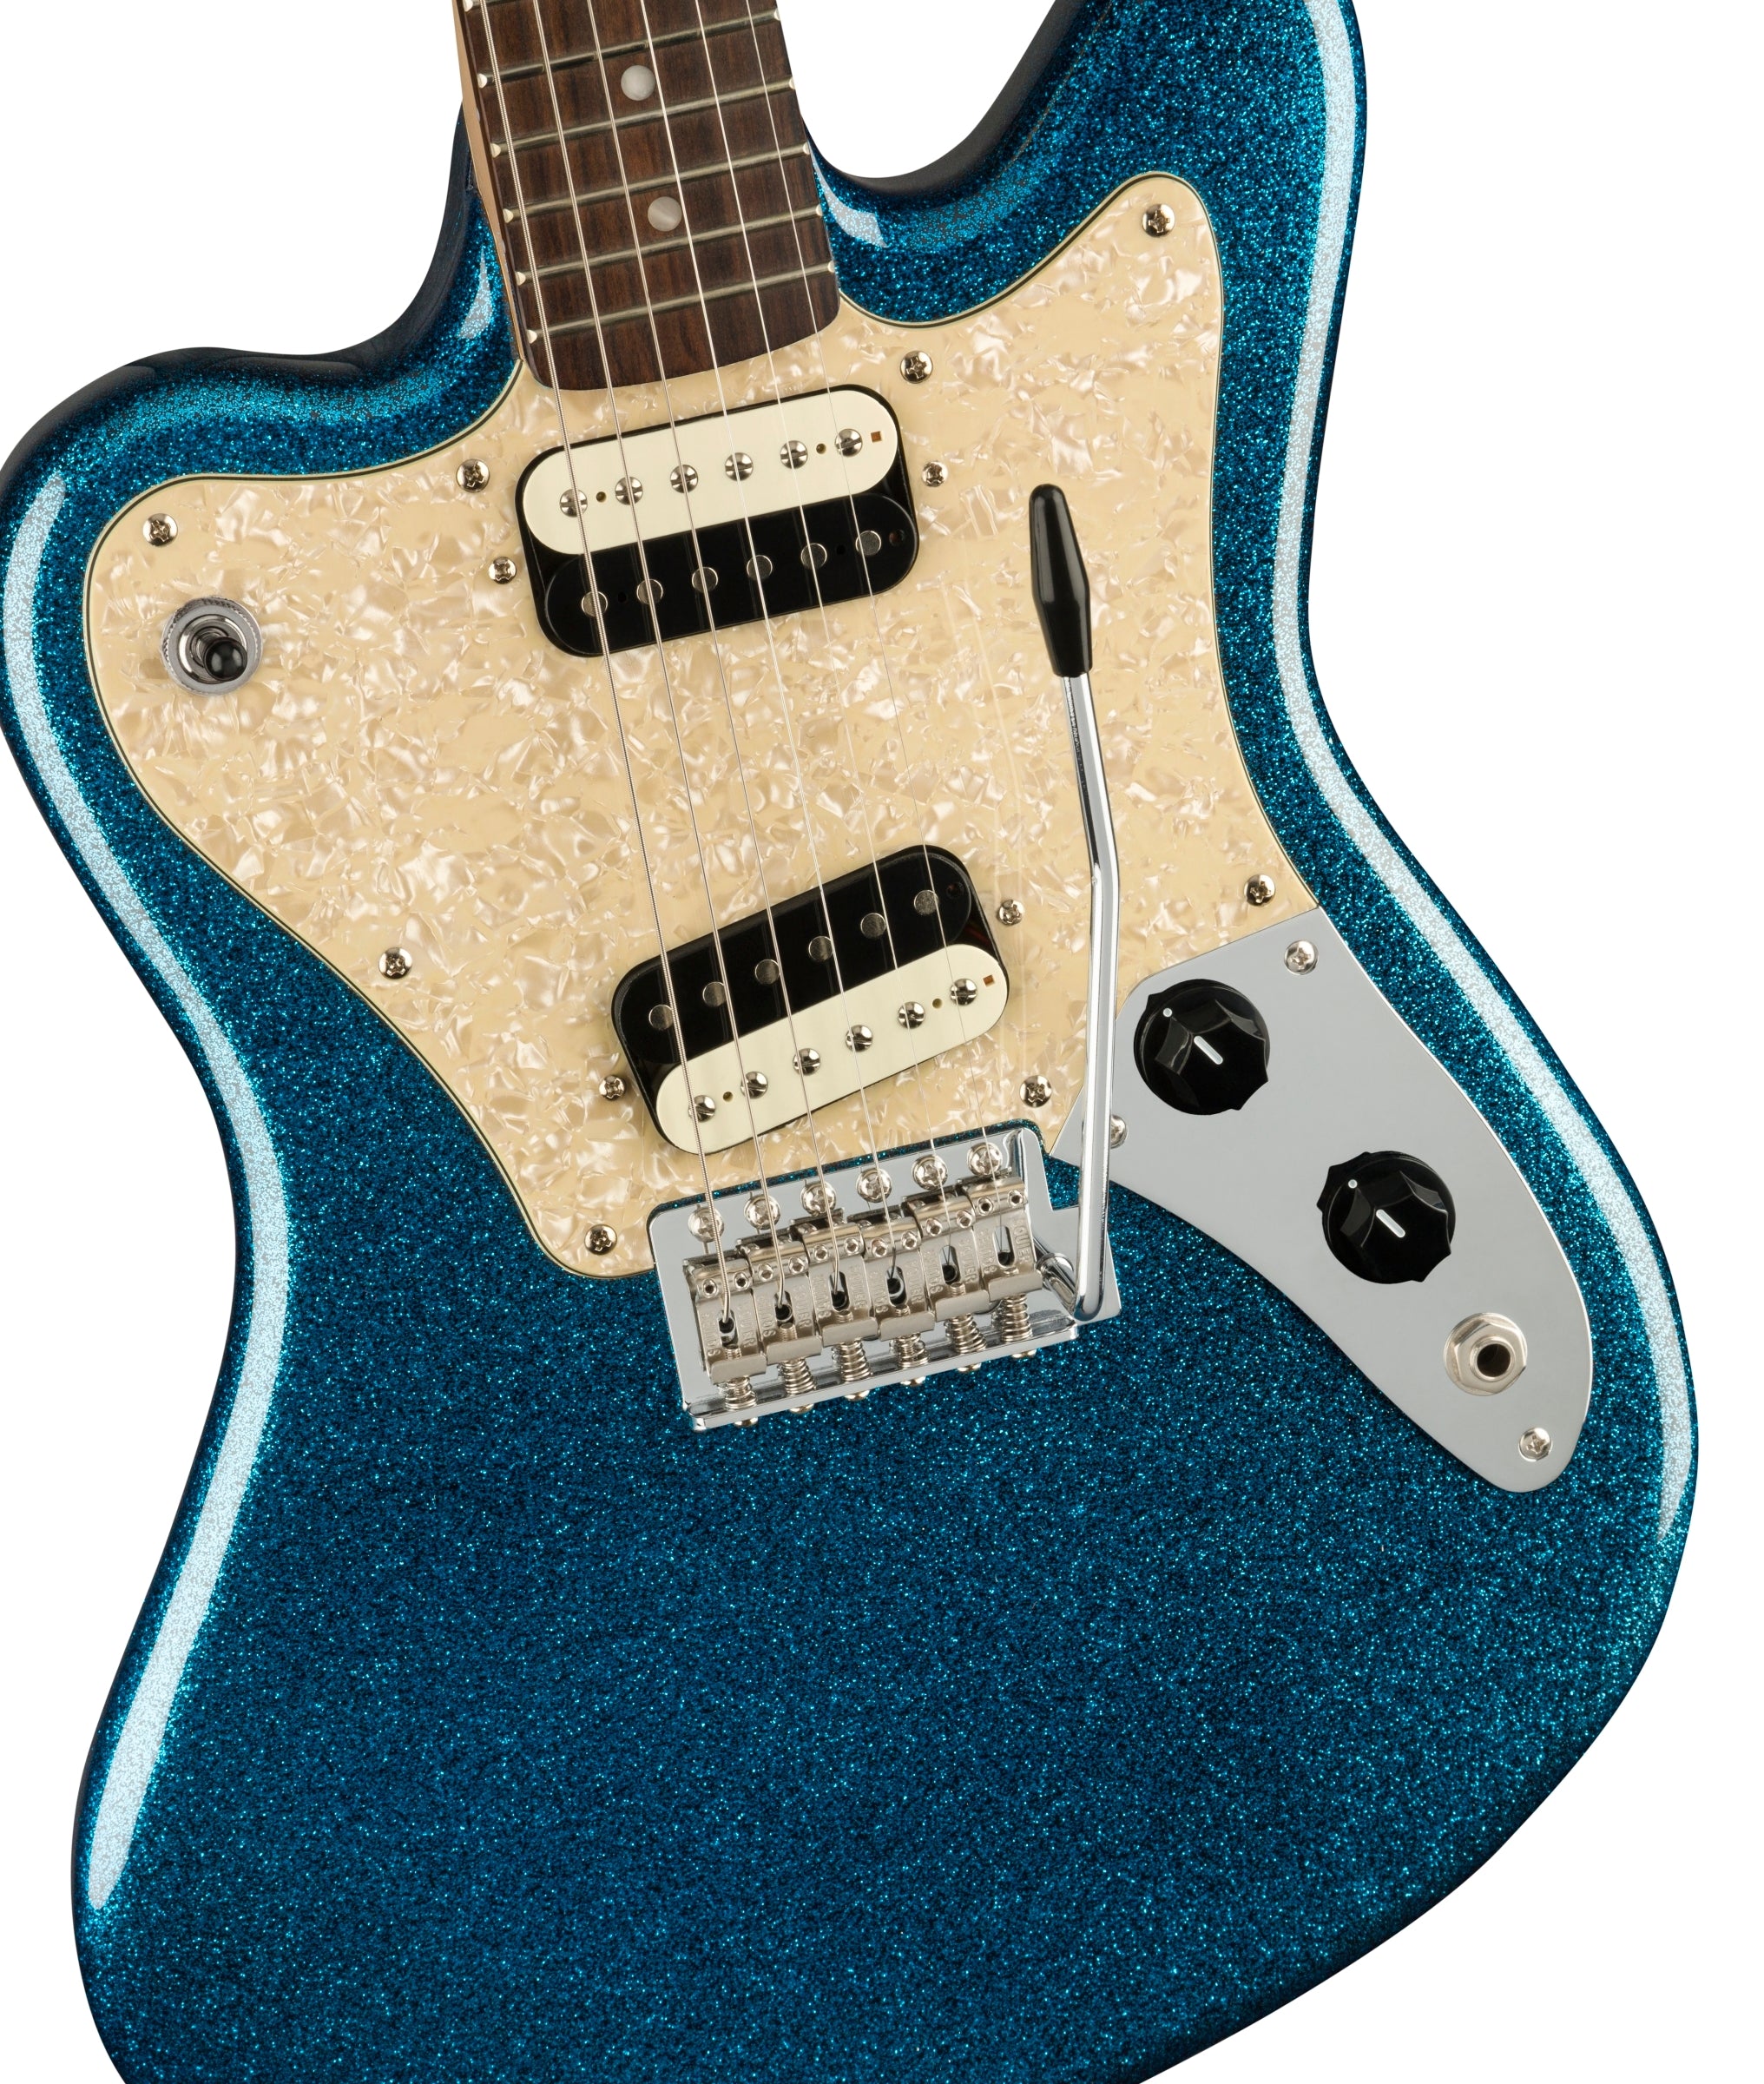 Squier Paranormal Super-Sonic Electric Guitar - Blue Sparkle